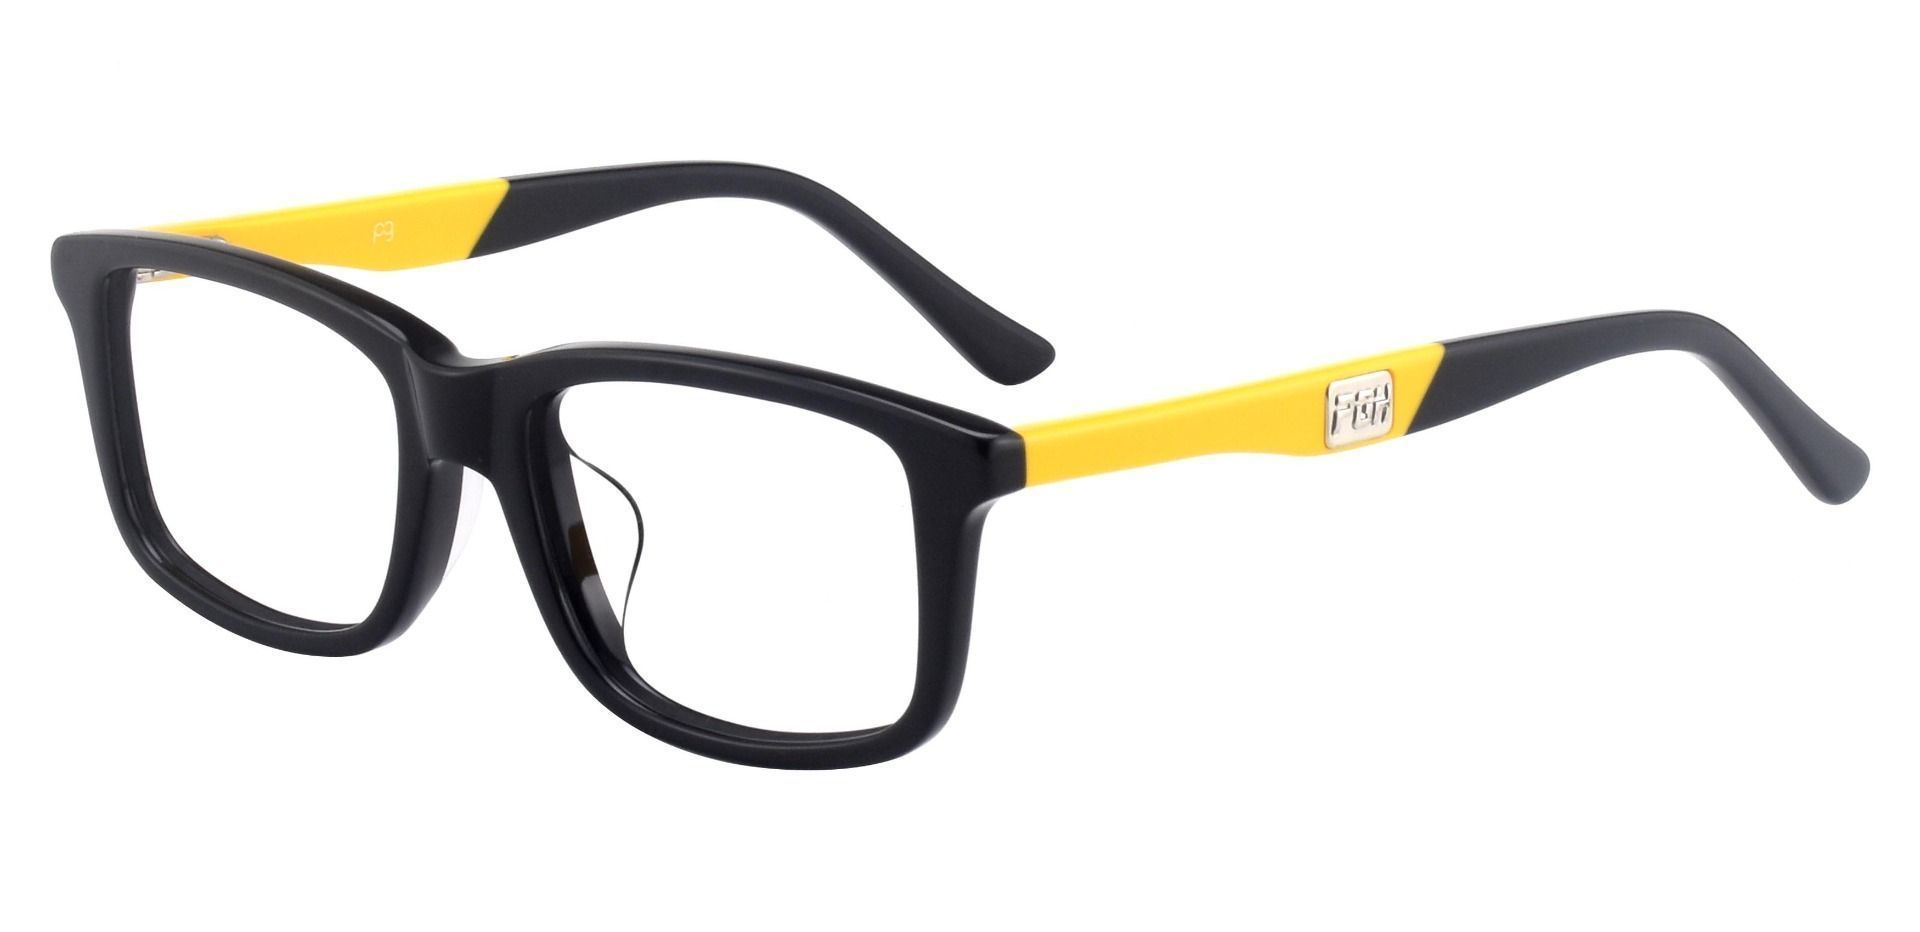 Allegheny Rectangle Blue Light Blocking Glasses - Black-yellow